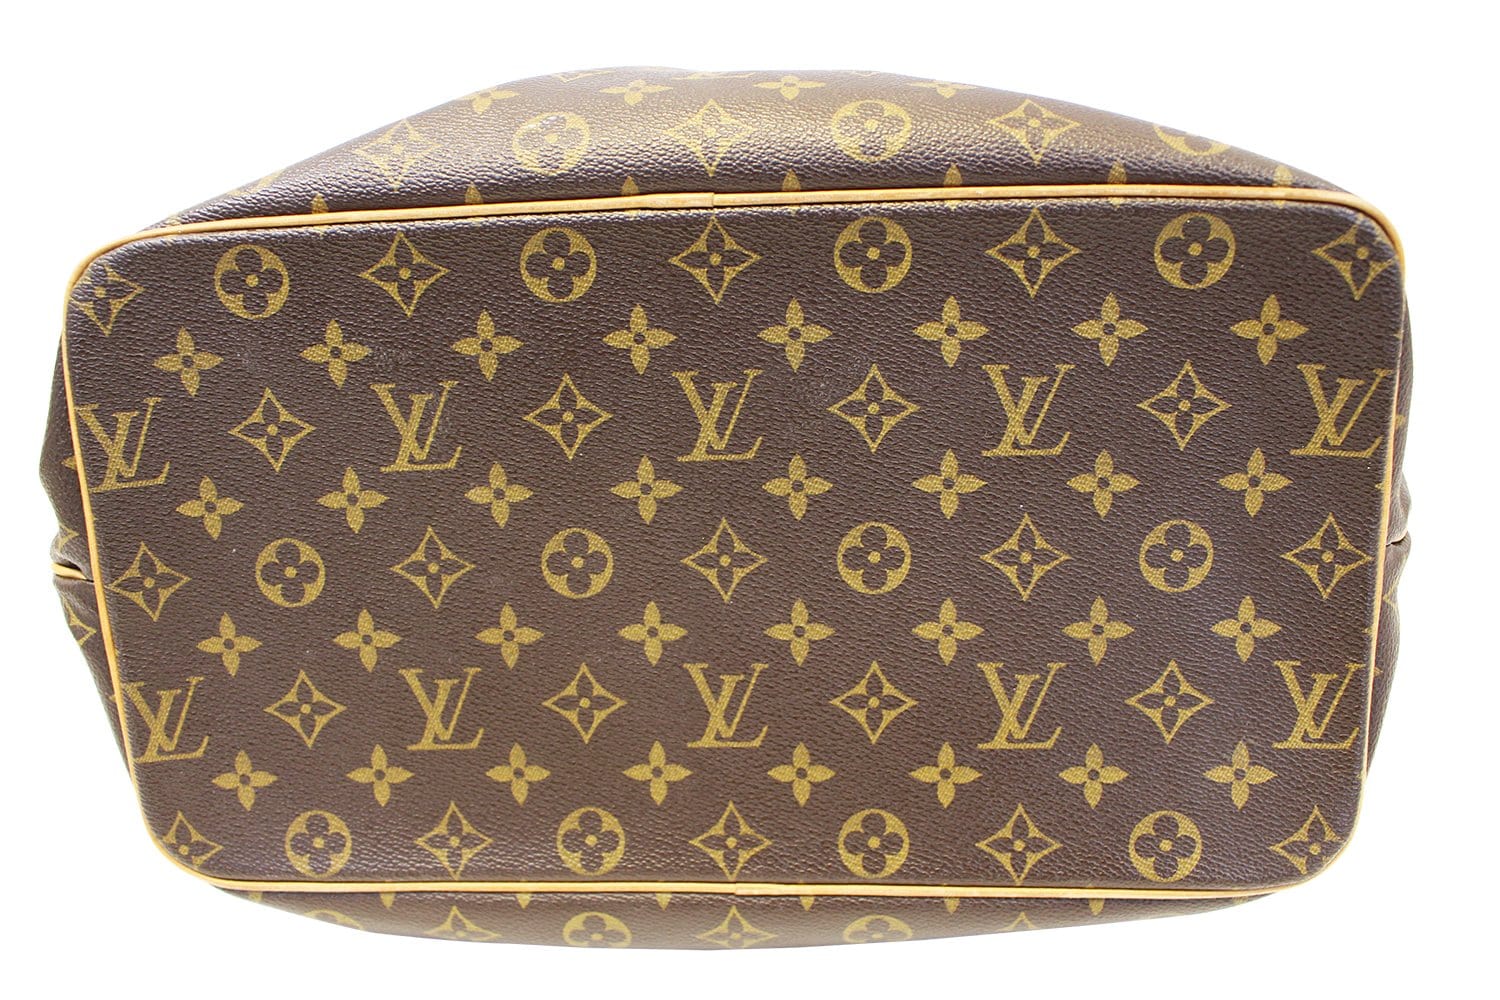 ❤️‍🩹SOLD❤️‍🩹 Louis Vuitton Palermo PM Monogram Shoulder